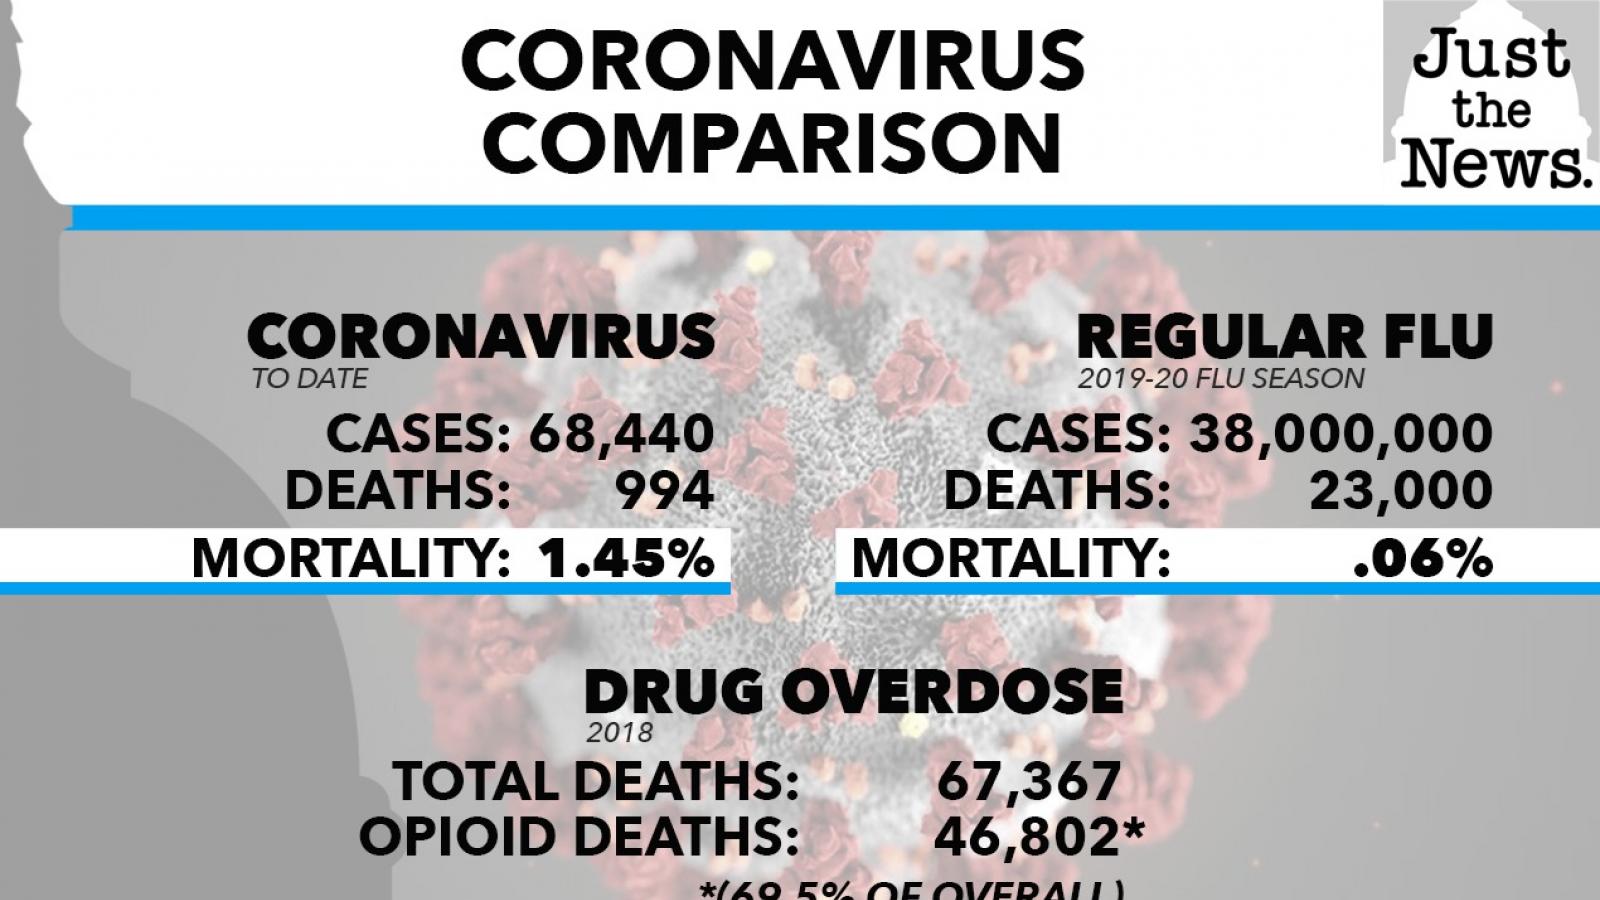 Coronavirus comparison to the flu